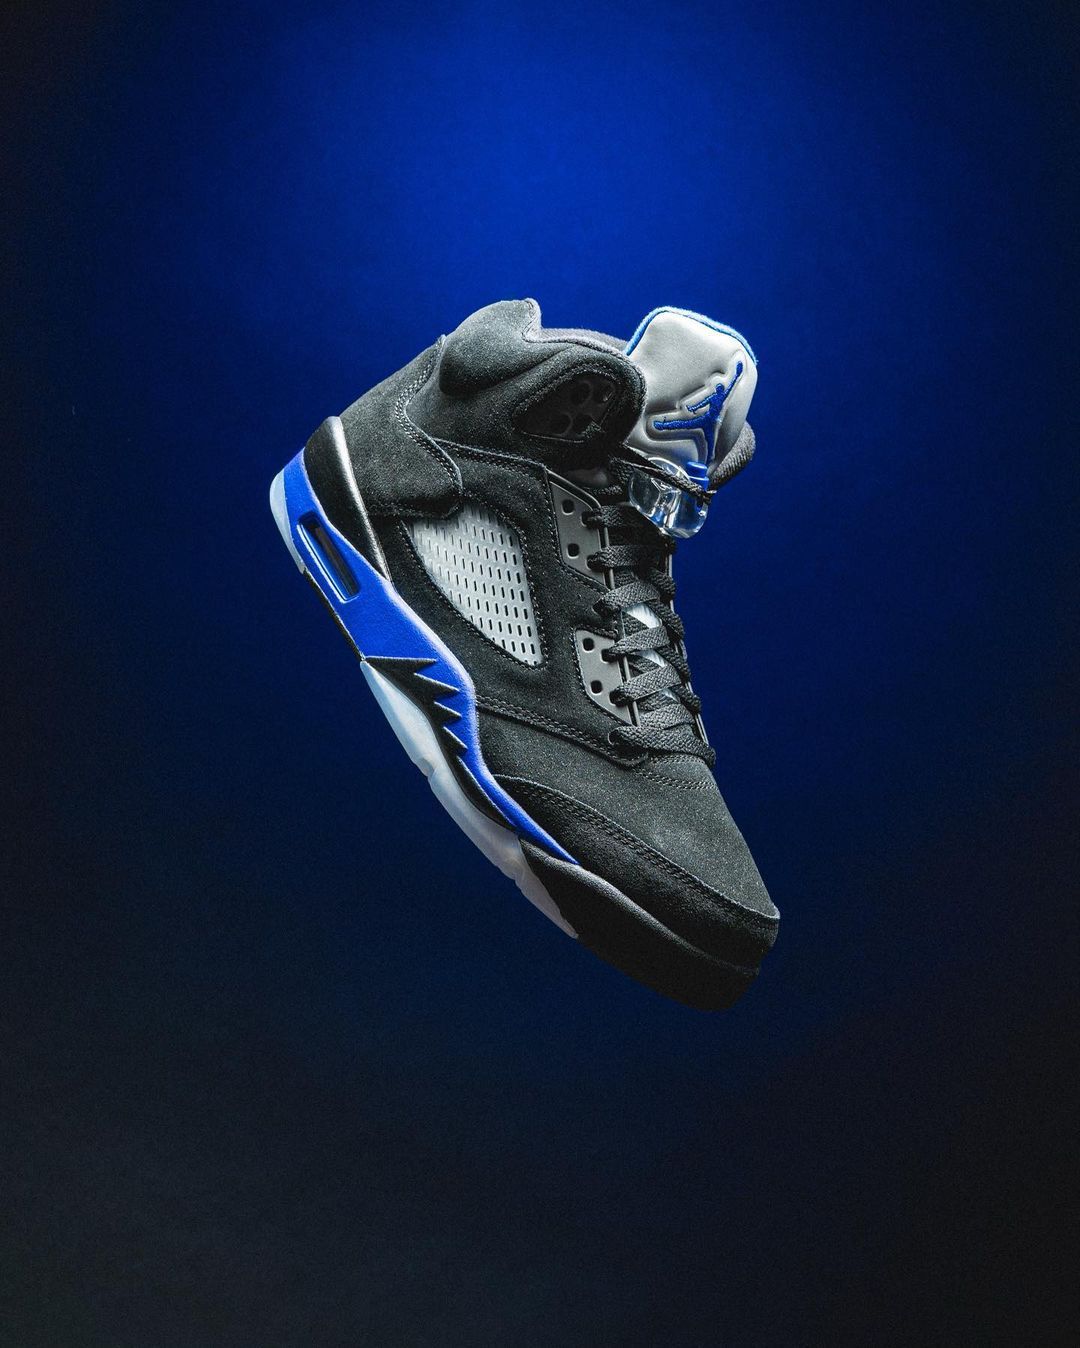 A pair of black and blue sneakers floating in the air. - Air Jordan 5